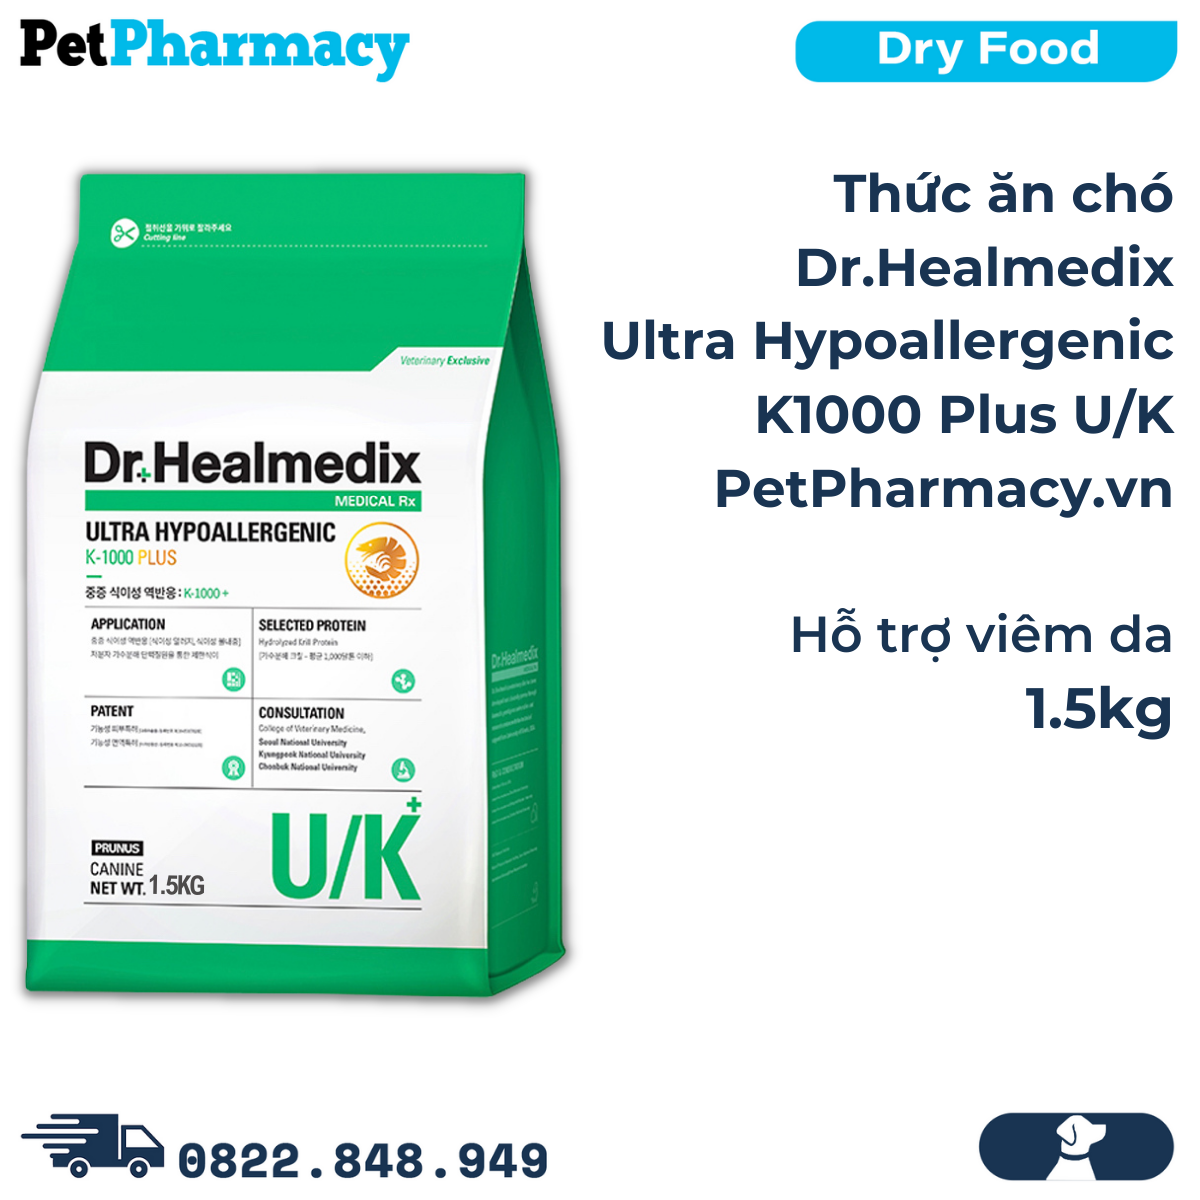  Thức ăn chó Dr.Healmedix Ultra Hypoallergenic K1000 Plus U/K 1.5kg - hỗ trợ viêm da PetPharmacy 